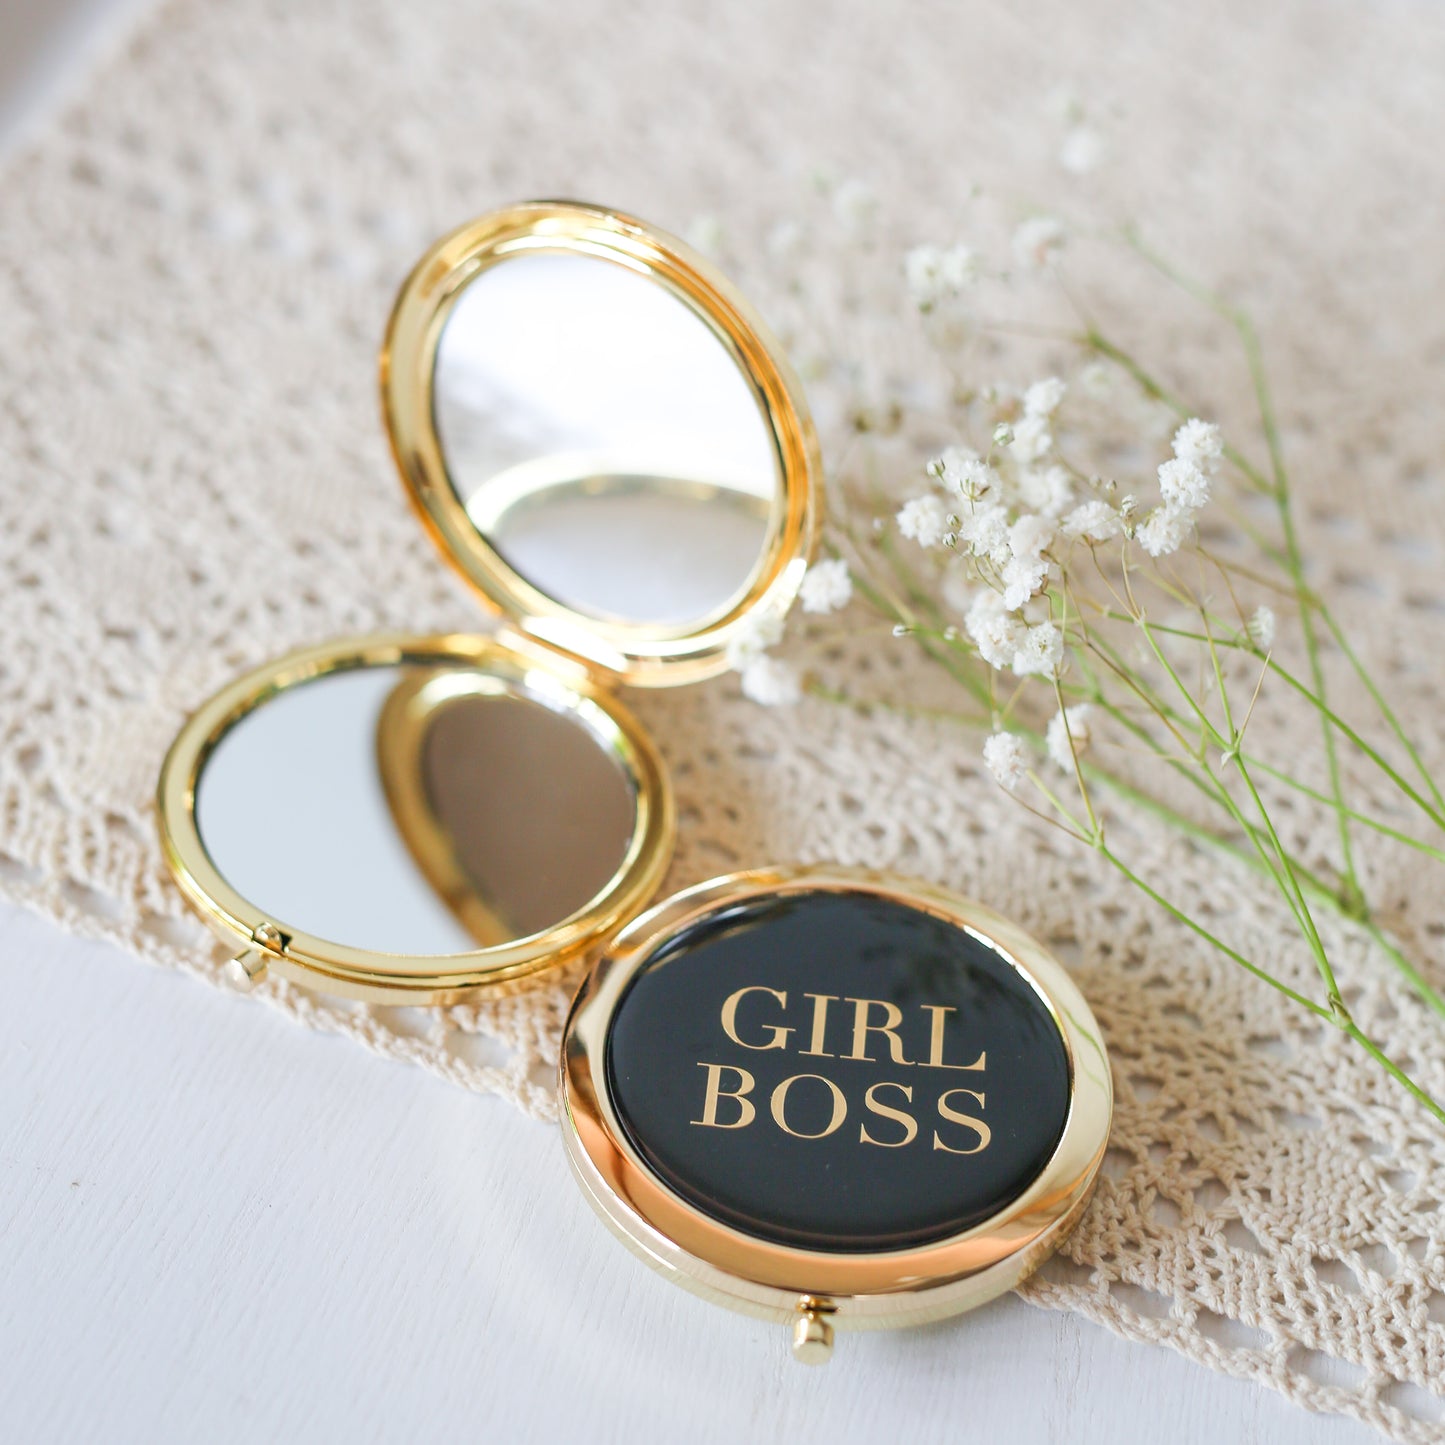 Girl Boss Compact Double Mirror